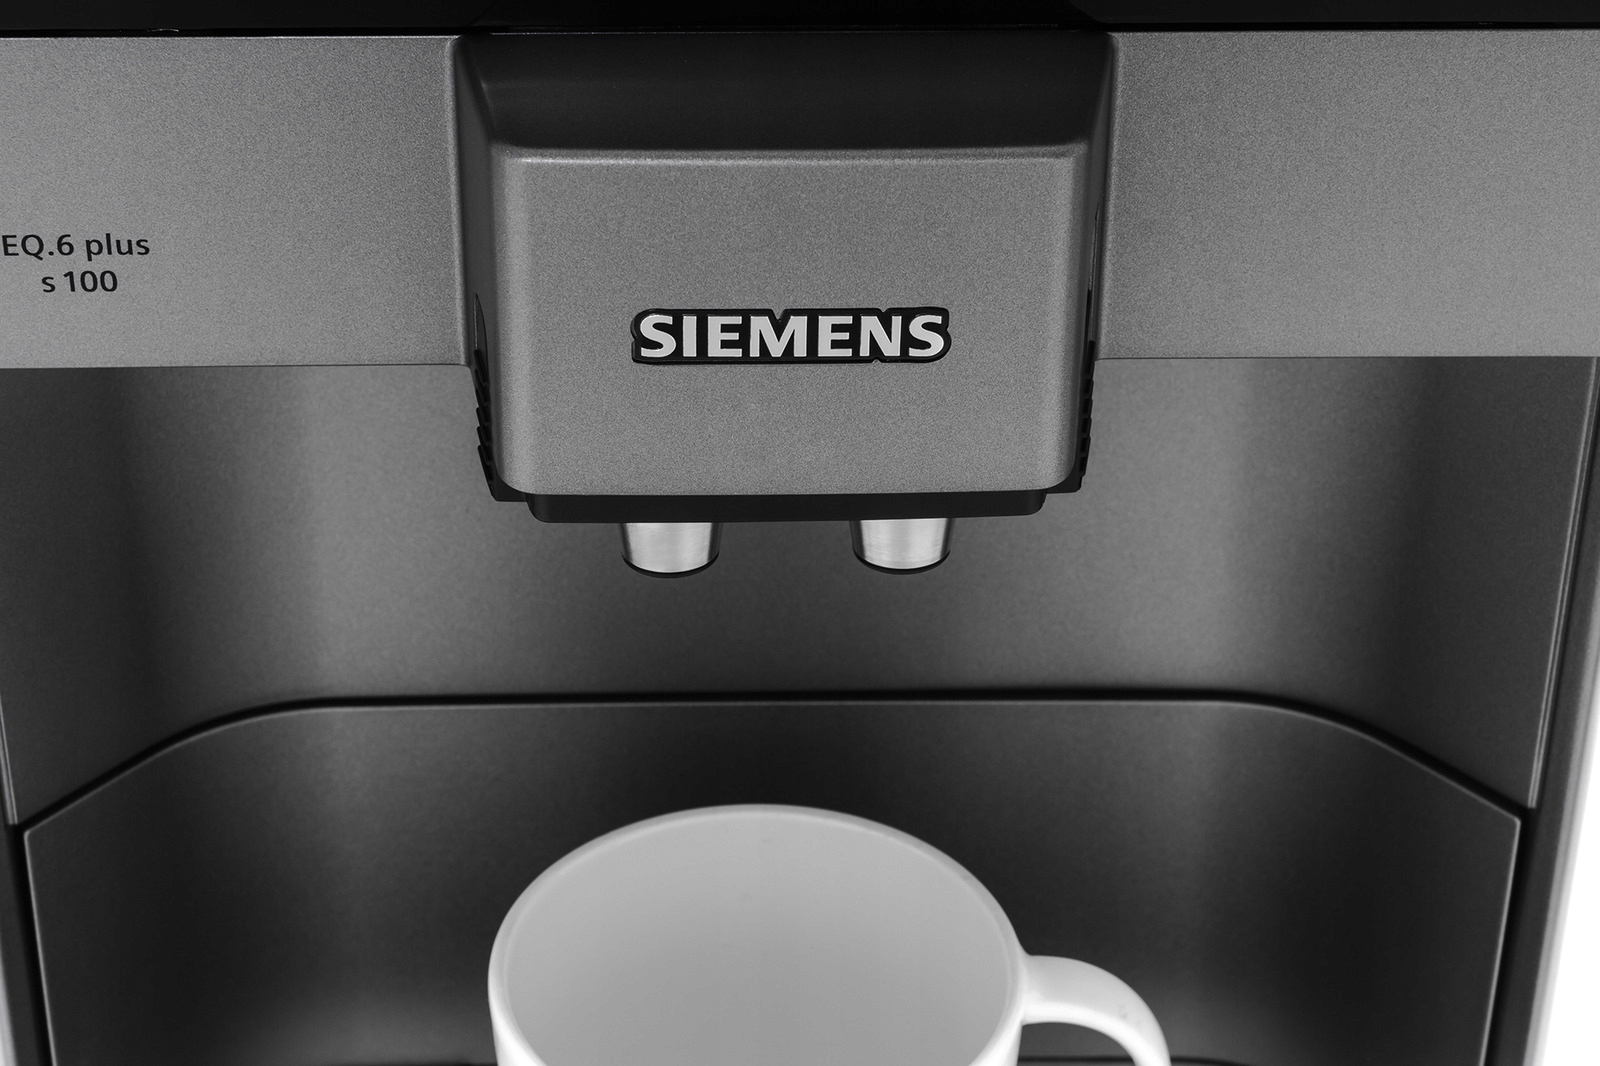 Siemens s100 кофемашина. Siemens EQ.6 Plus s100. Siemens te651209rw EQ.6 Plus s100. Кофемашина Siemens te651209rw EQ.6 Plus s100, серый. Кофемашина Siemens EQ.6 Plus.